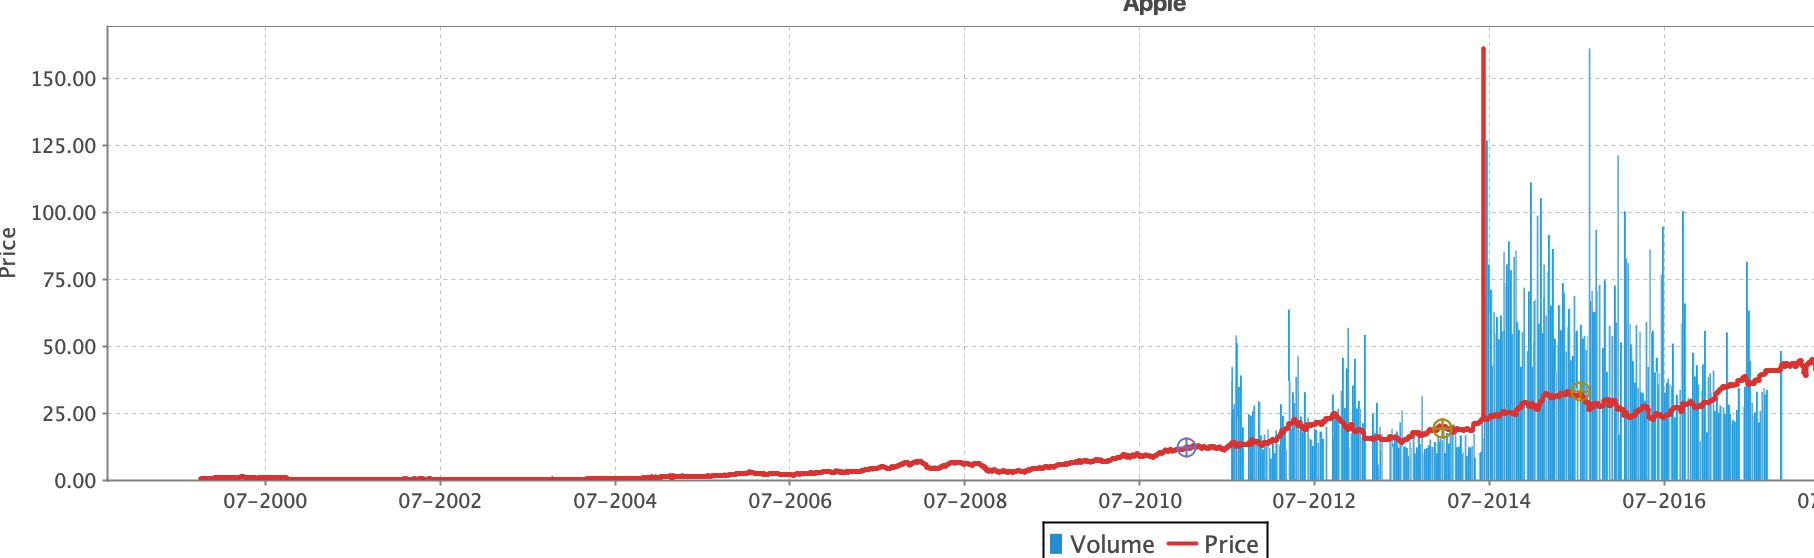 Appl_price_excursion_graph